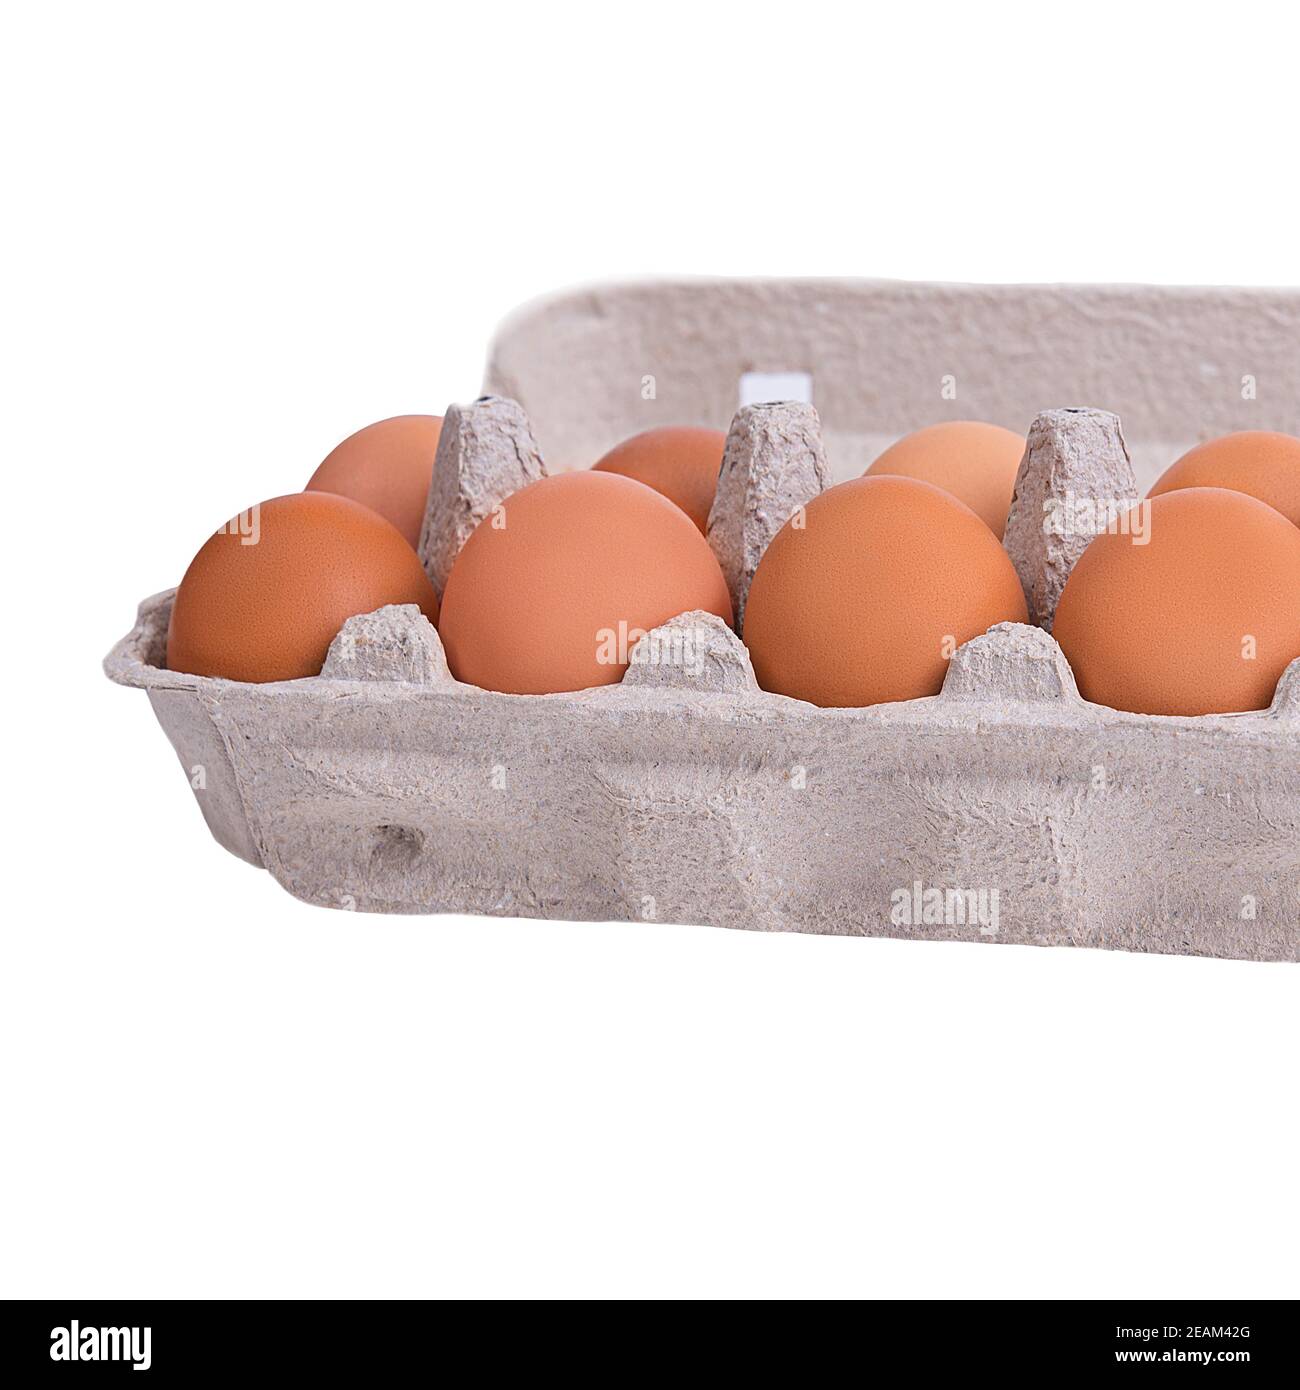 Ten brown eggs in a carton package Stock Photo